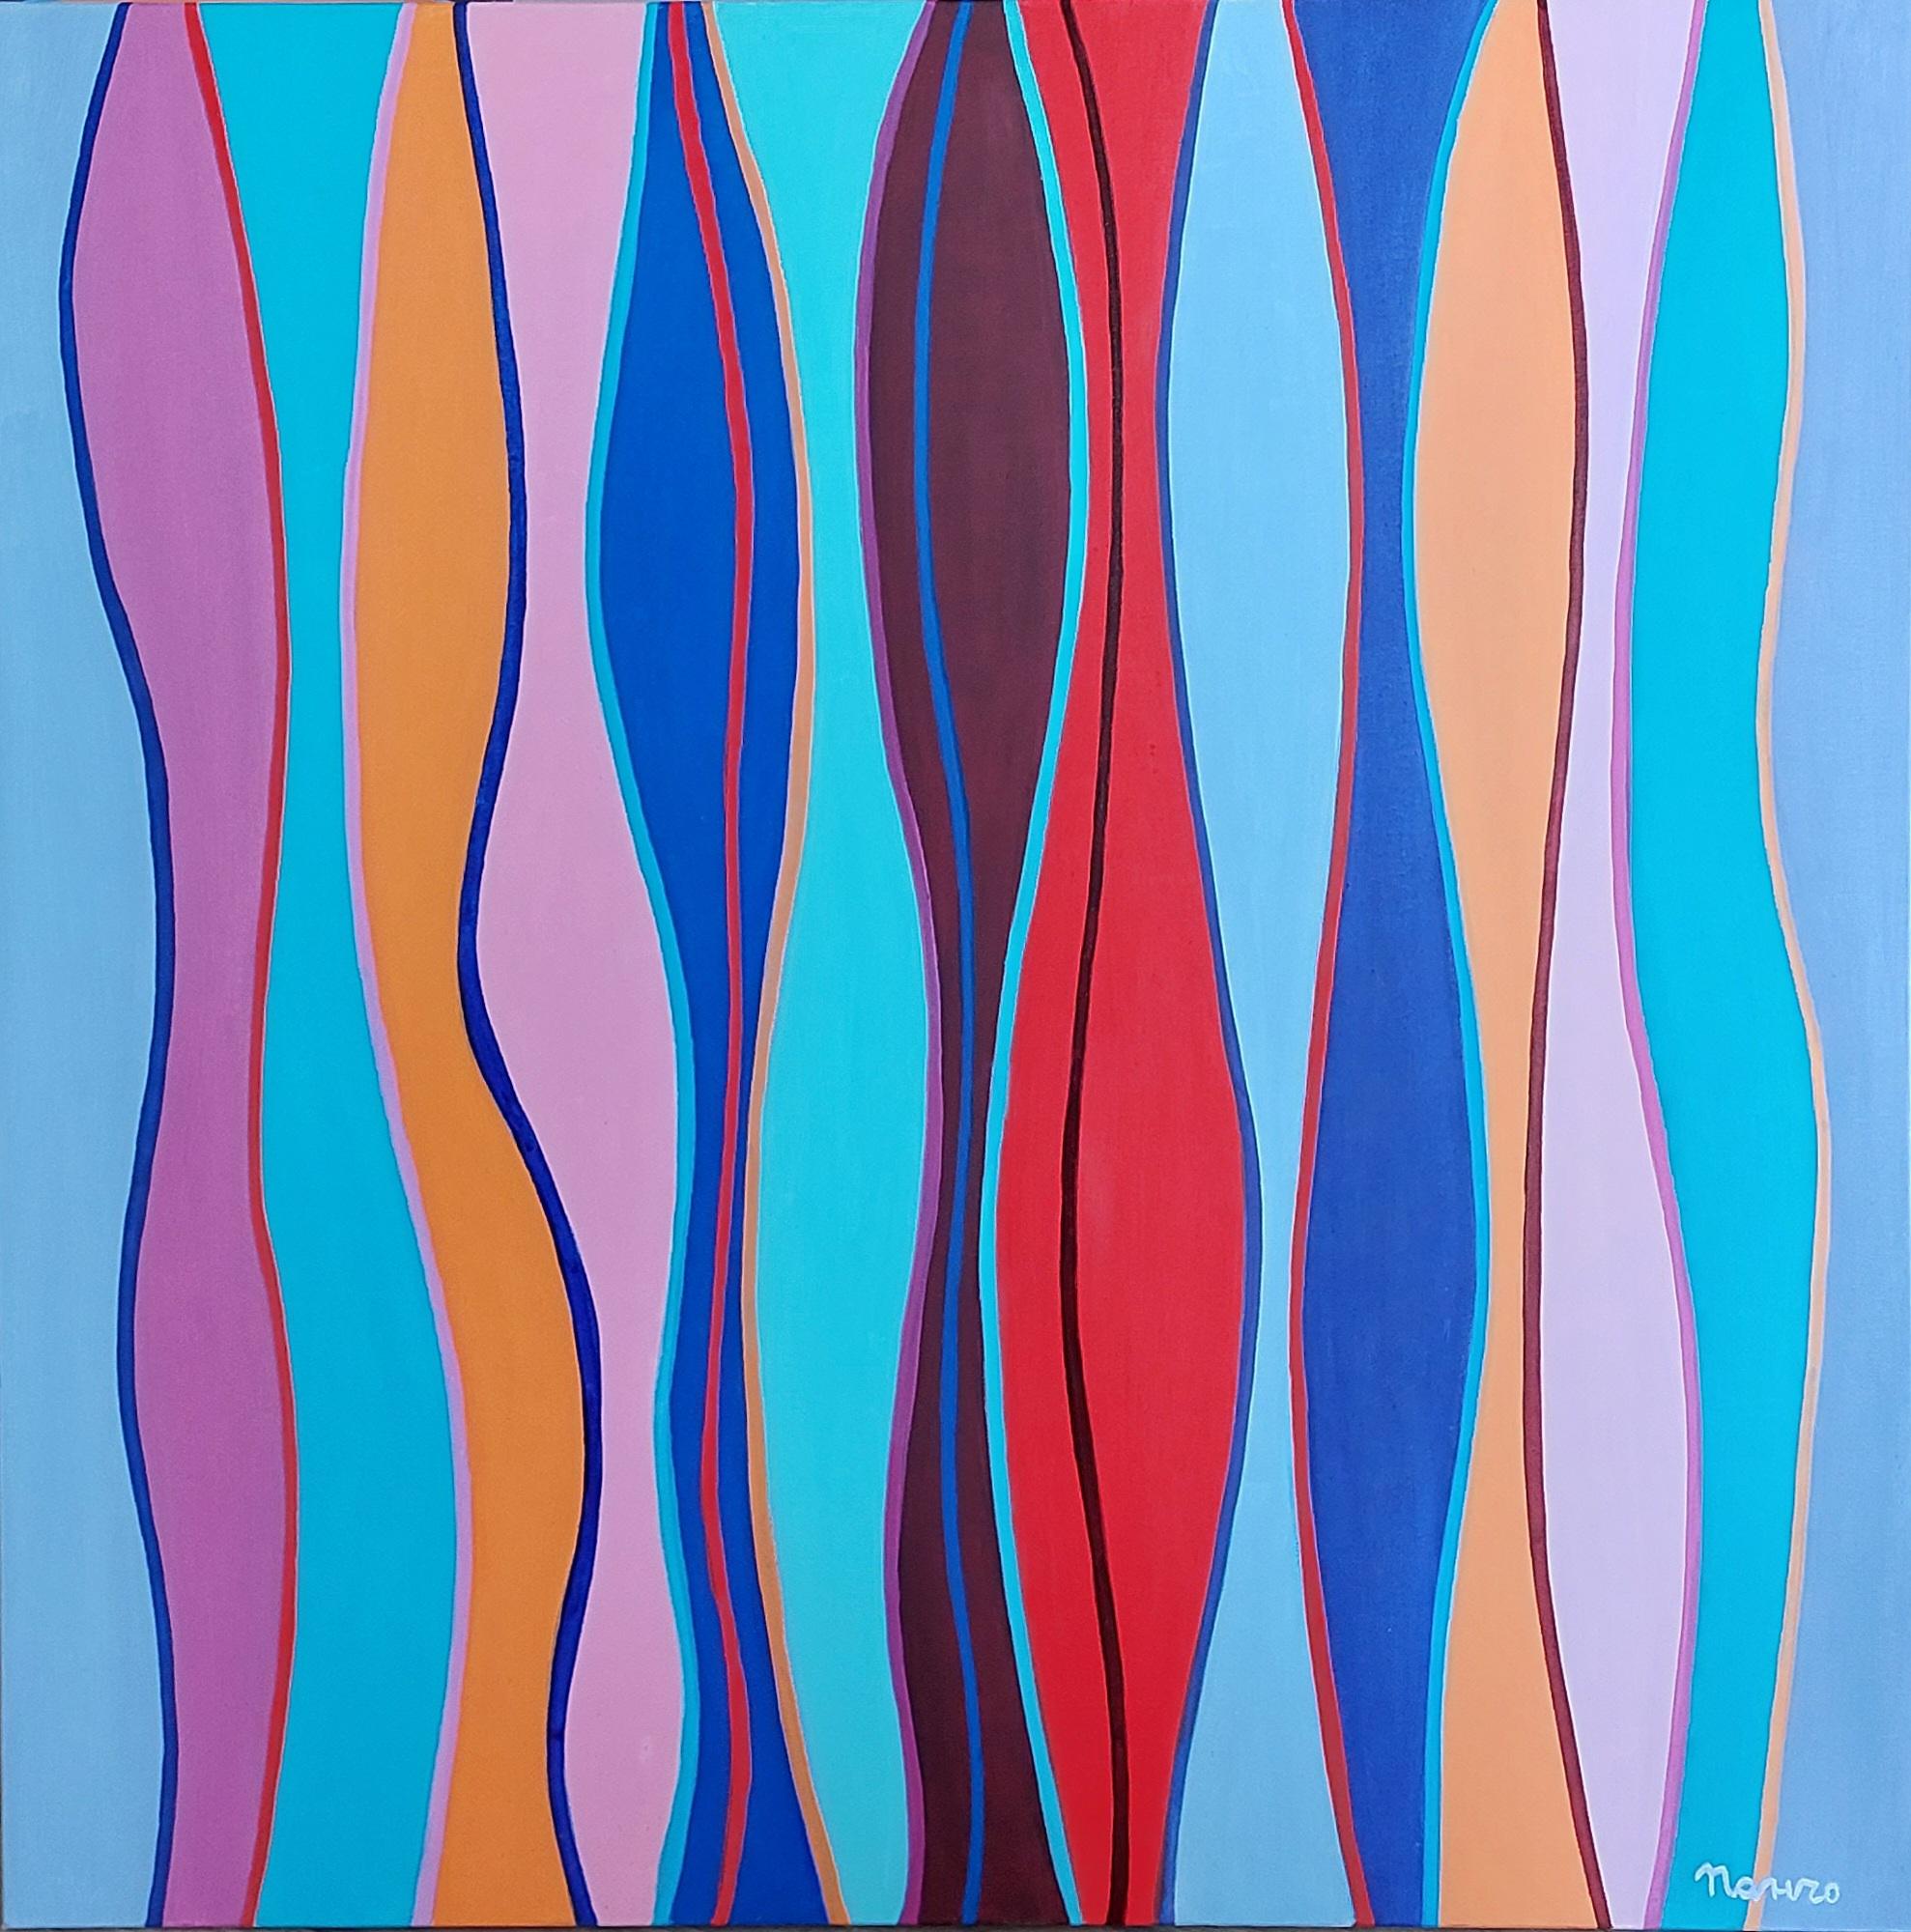  Colour Waves - Pop Art Acrylic Painting Colors Lilac Blue Orange Red